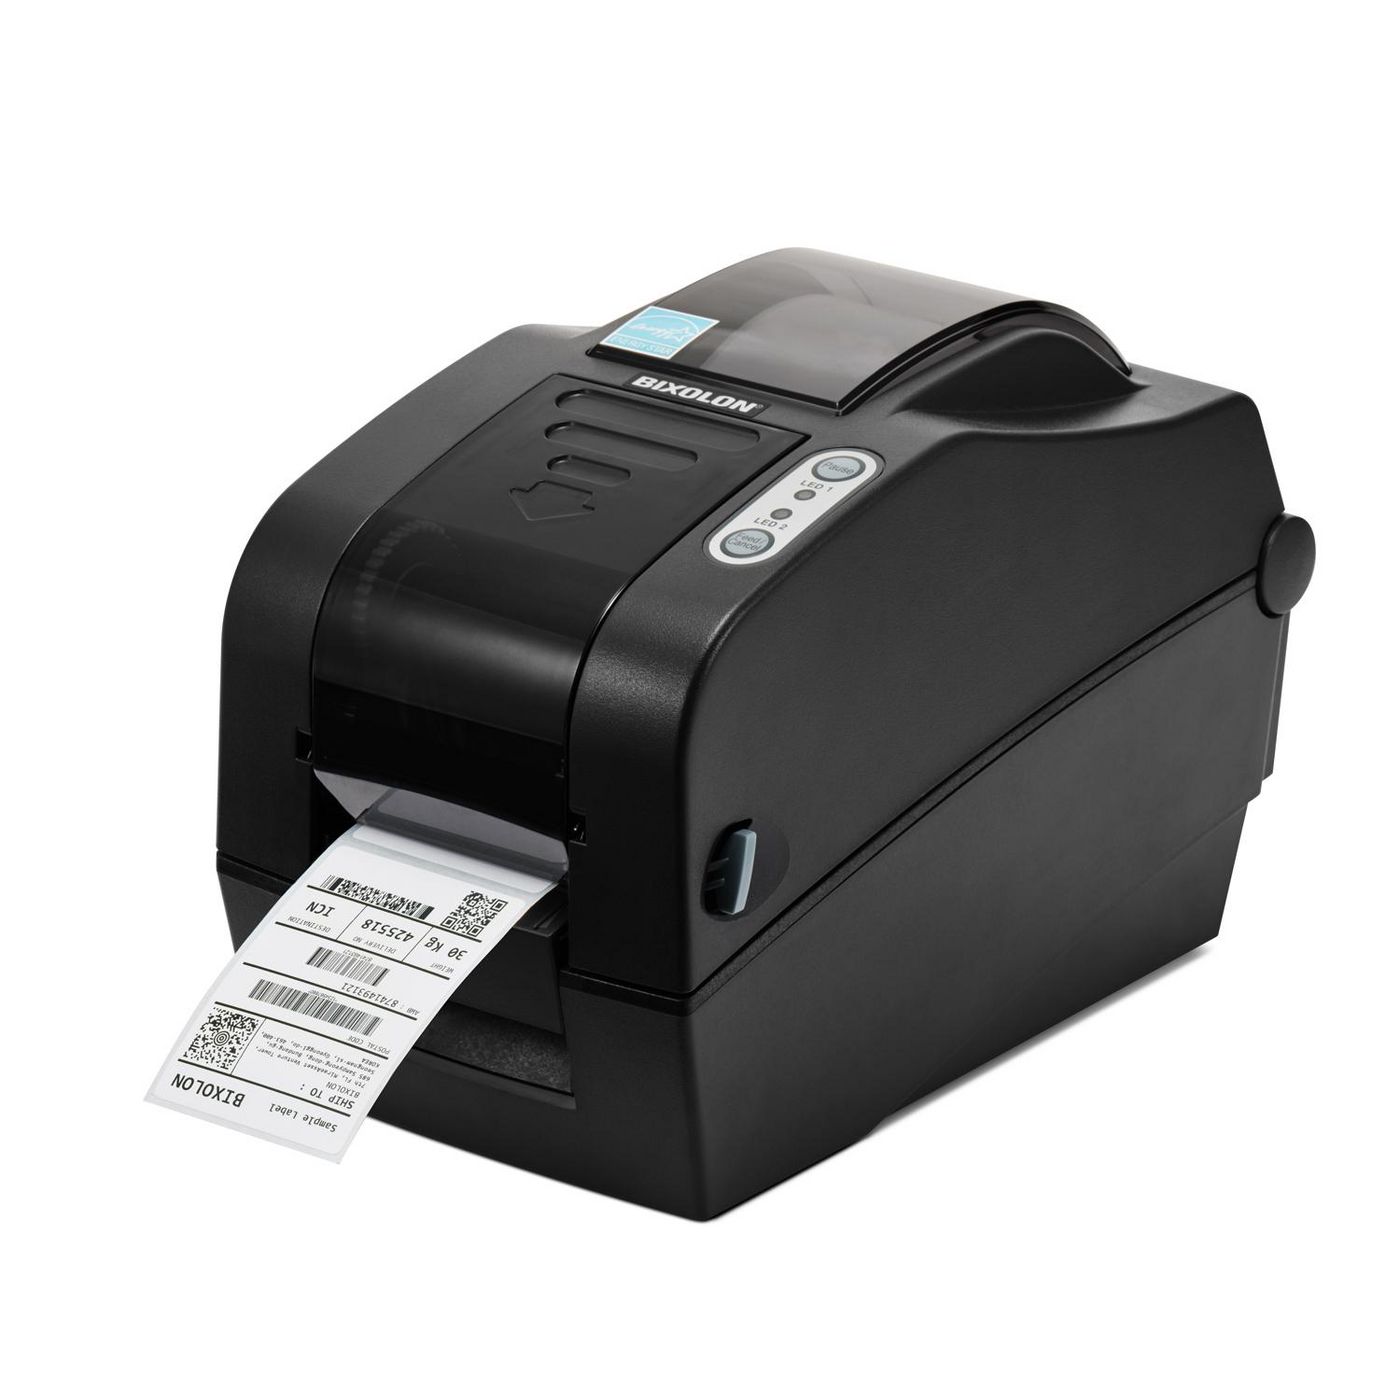 Slp-tx223eg - Label Printer - Direct Thermal - USB / Serial / Parallel